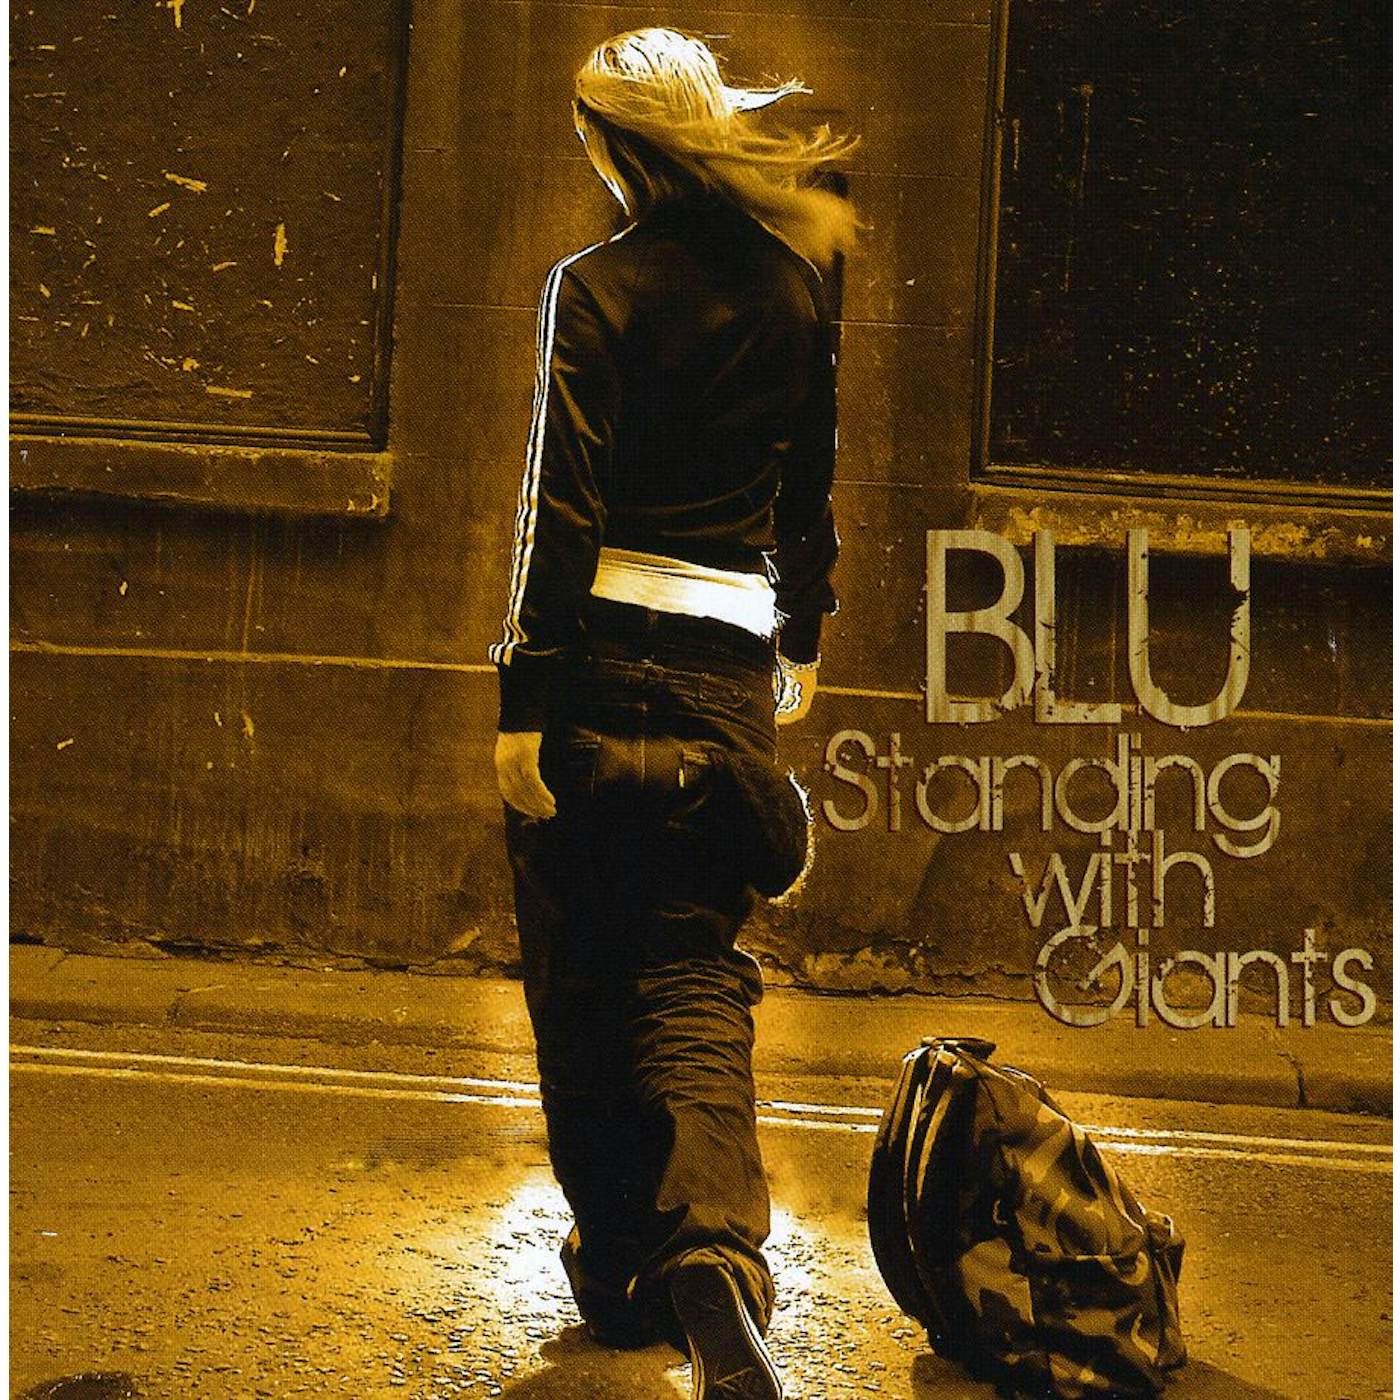 Blu STANDING WITH GIANTS CD